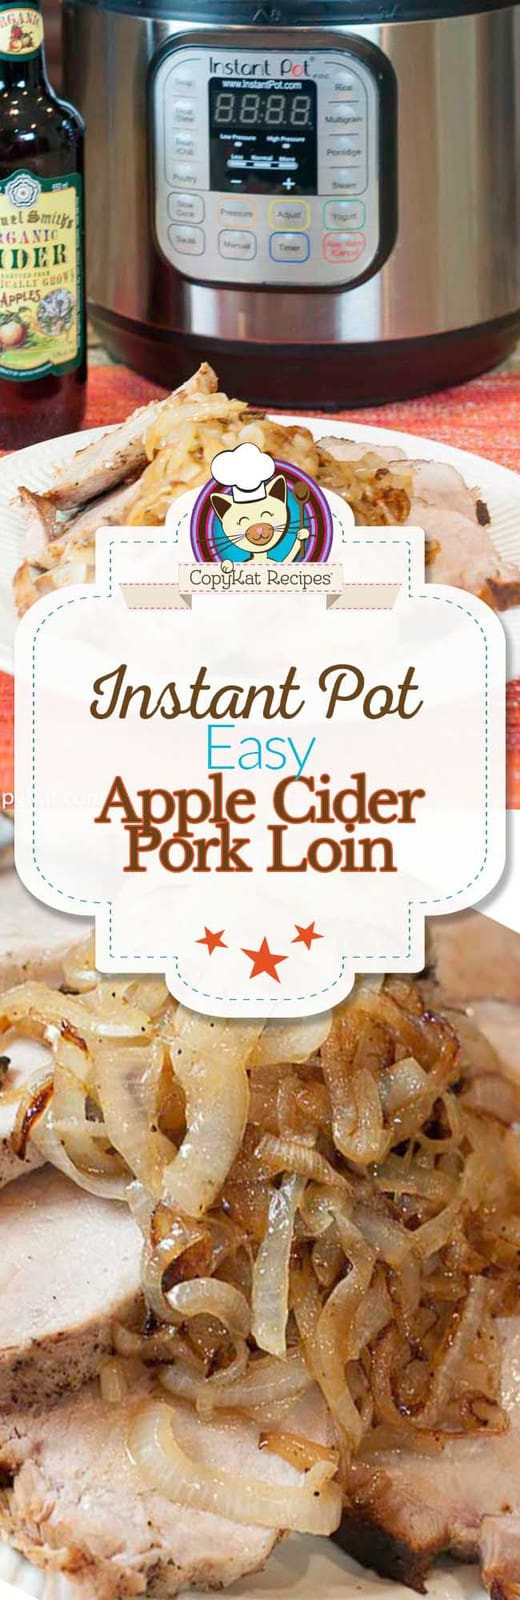 Instant Pot Pork Tenderloin Cooking Time
 Instant Pot Apple Cider Pork Loin